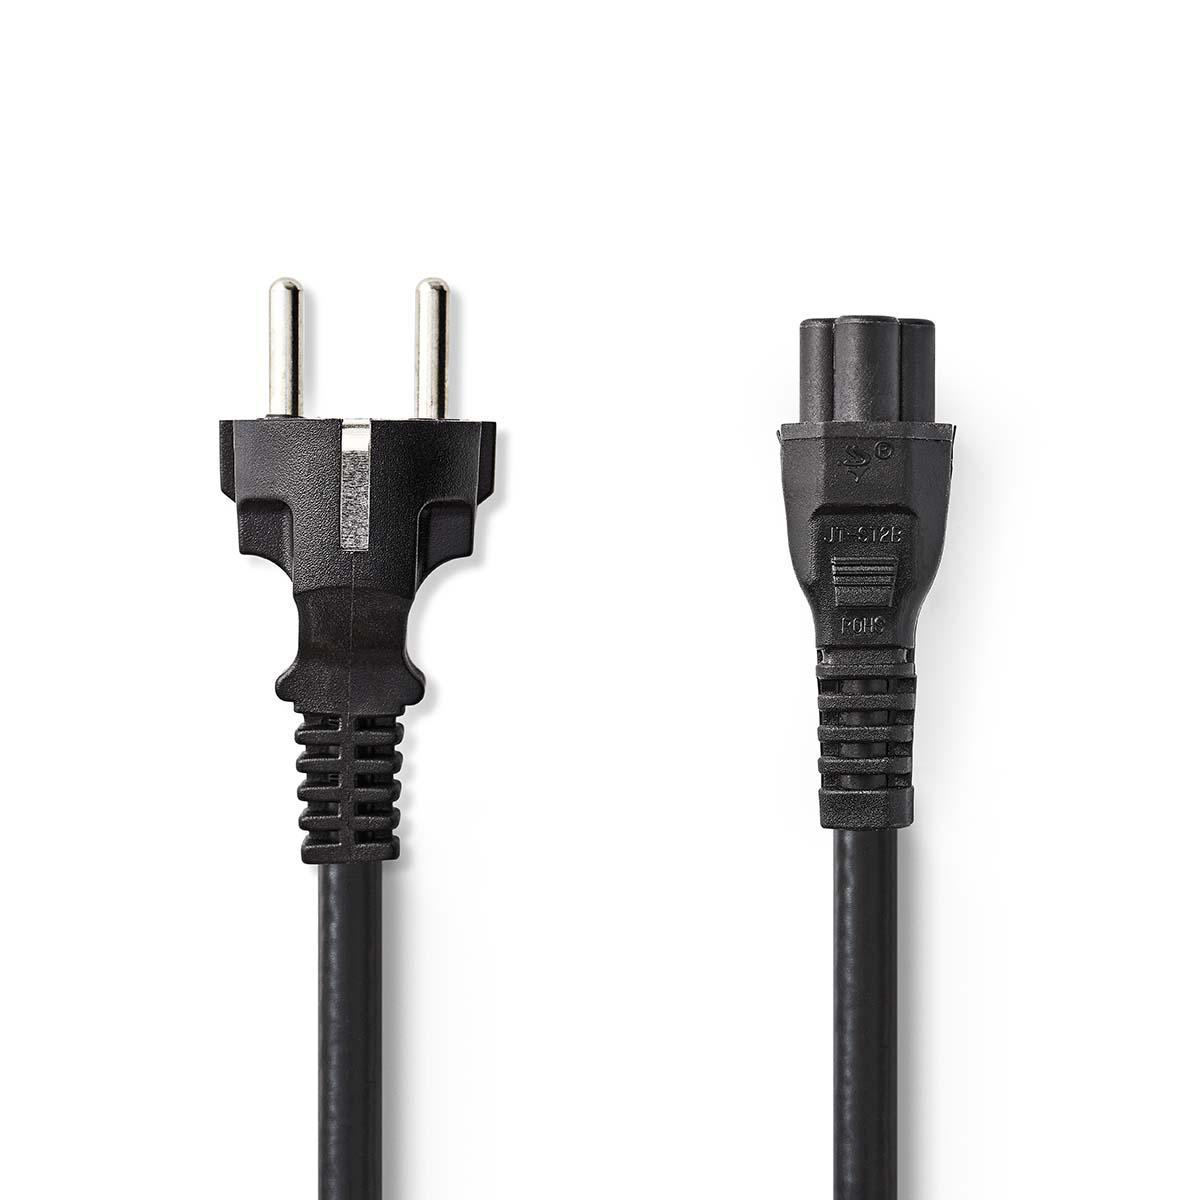 Nedis napájecí kabel zástrčka UNISCHUKO - IEC320-C5 mickey mouse černá, 5 m (CEGP10130BK50)